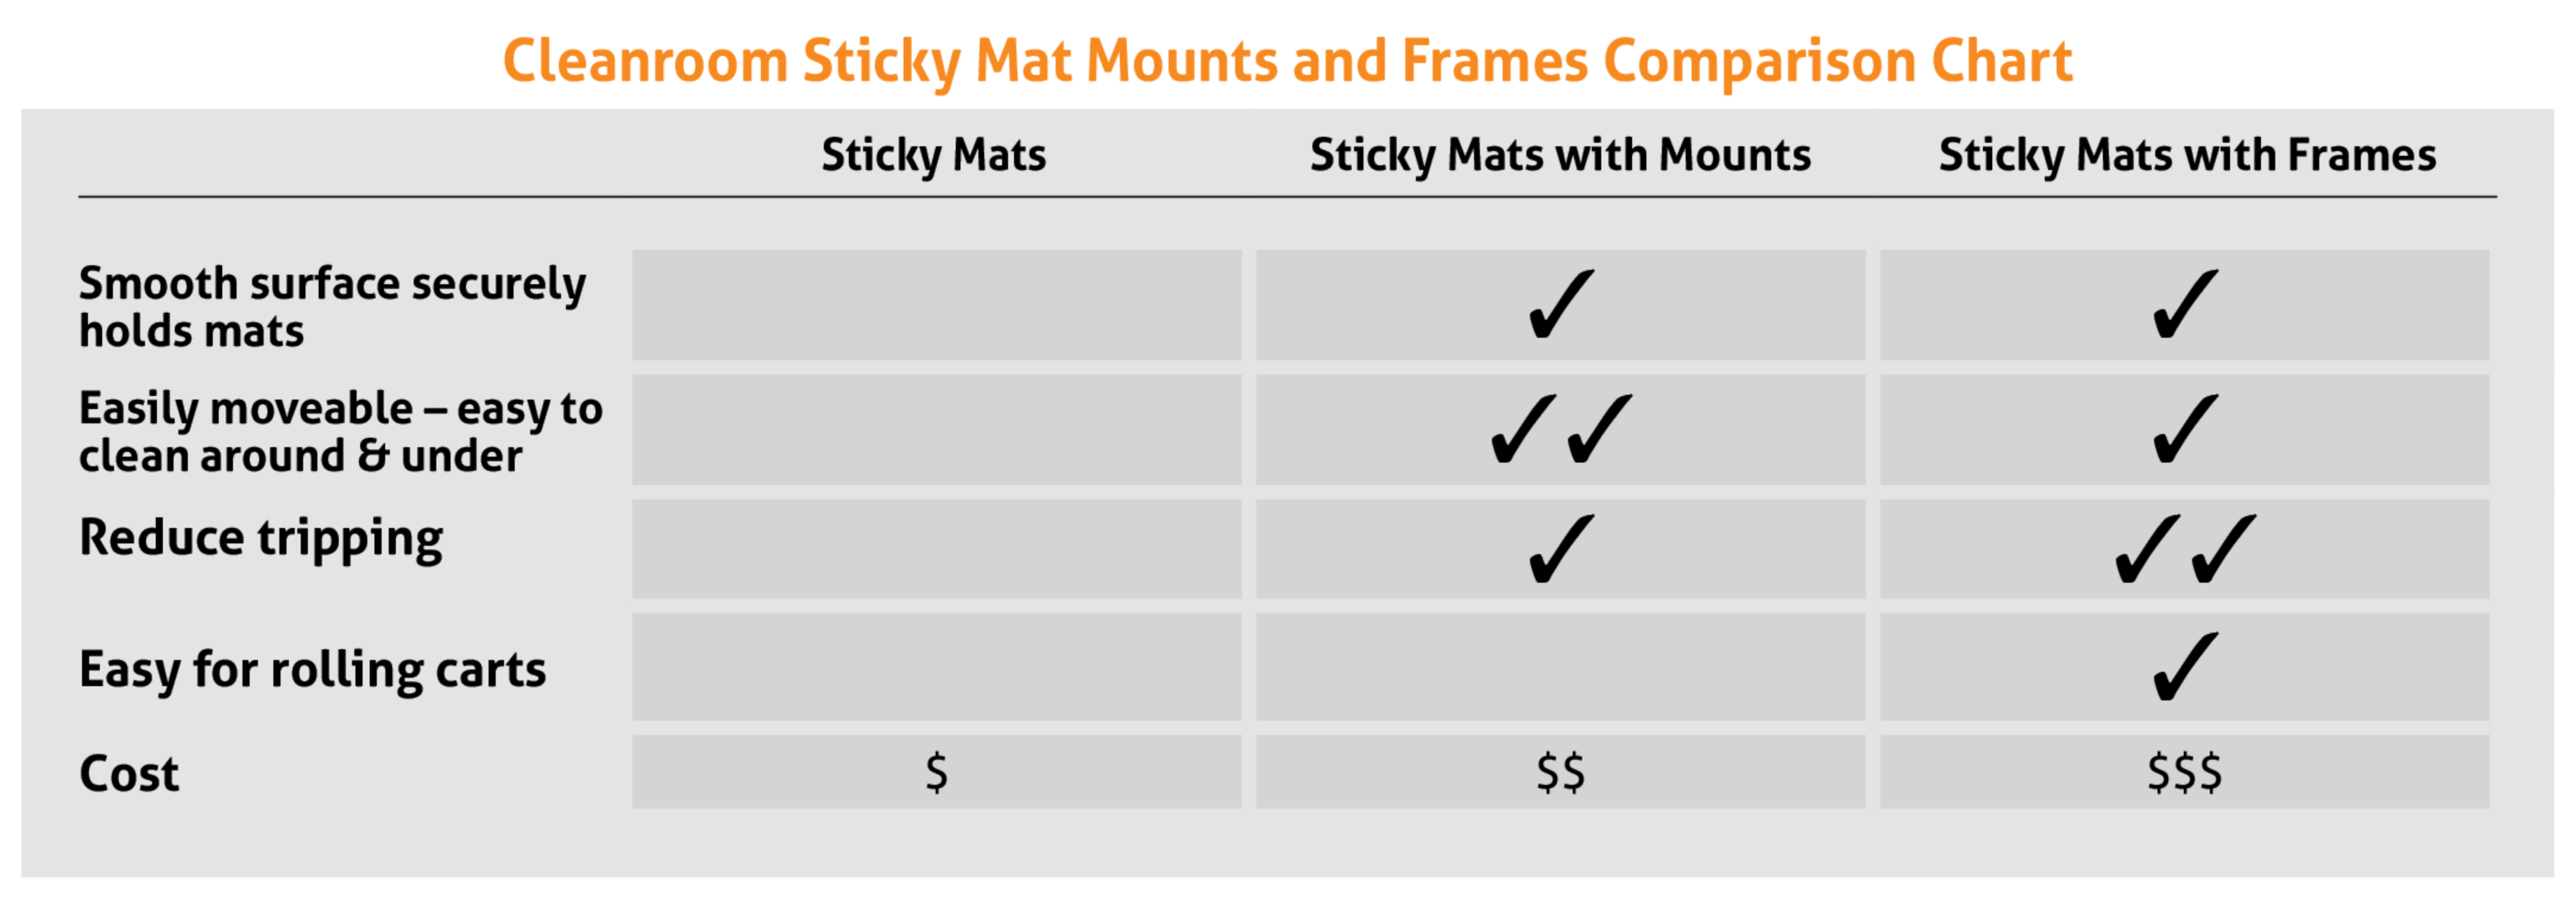 Cleanroom Sticky Mat Mounts & Frames